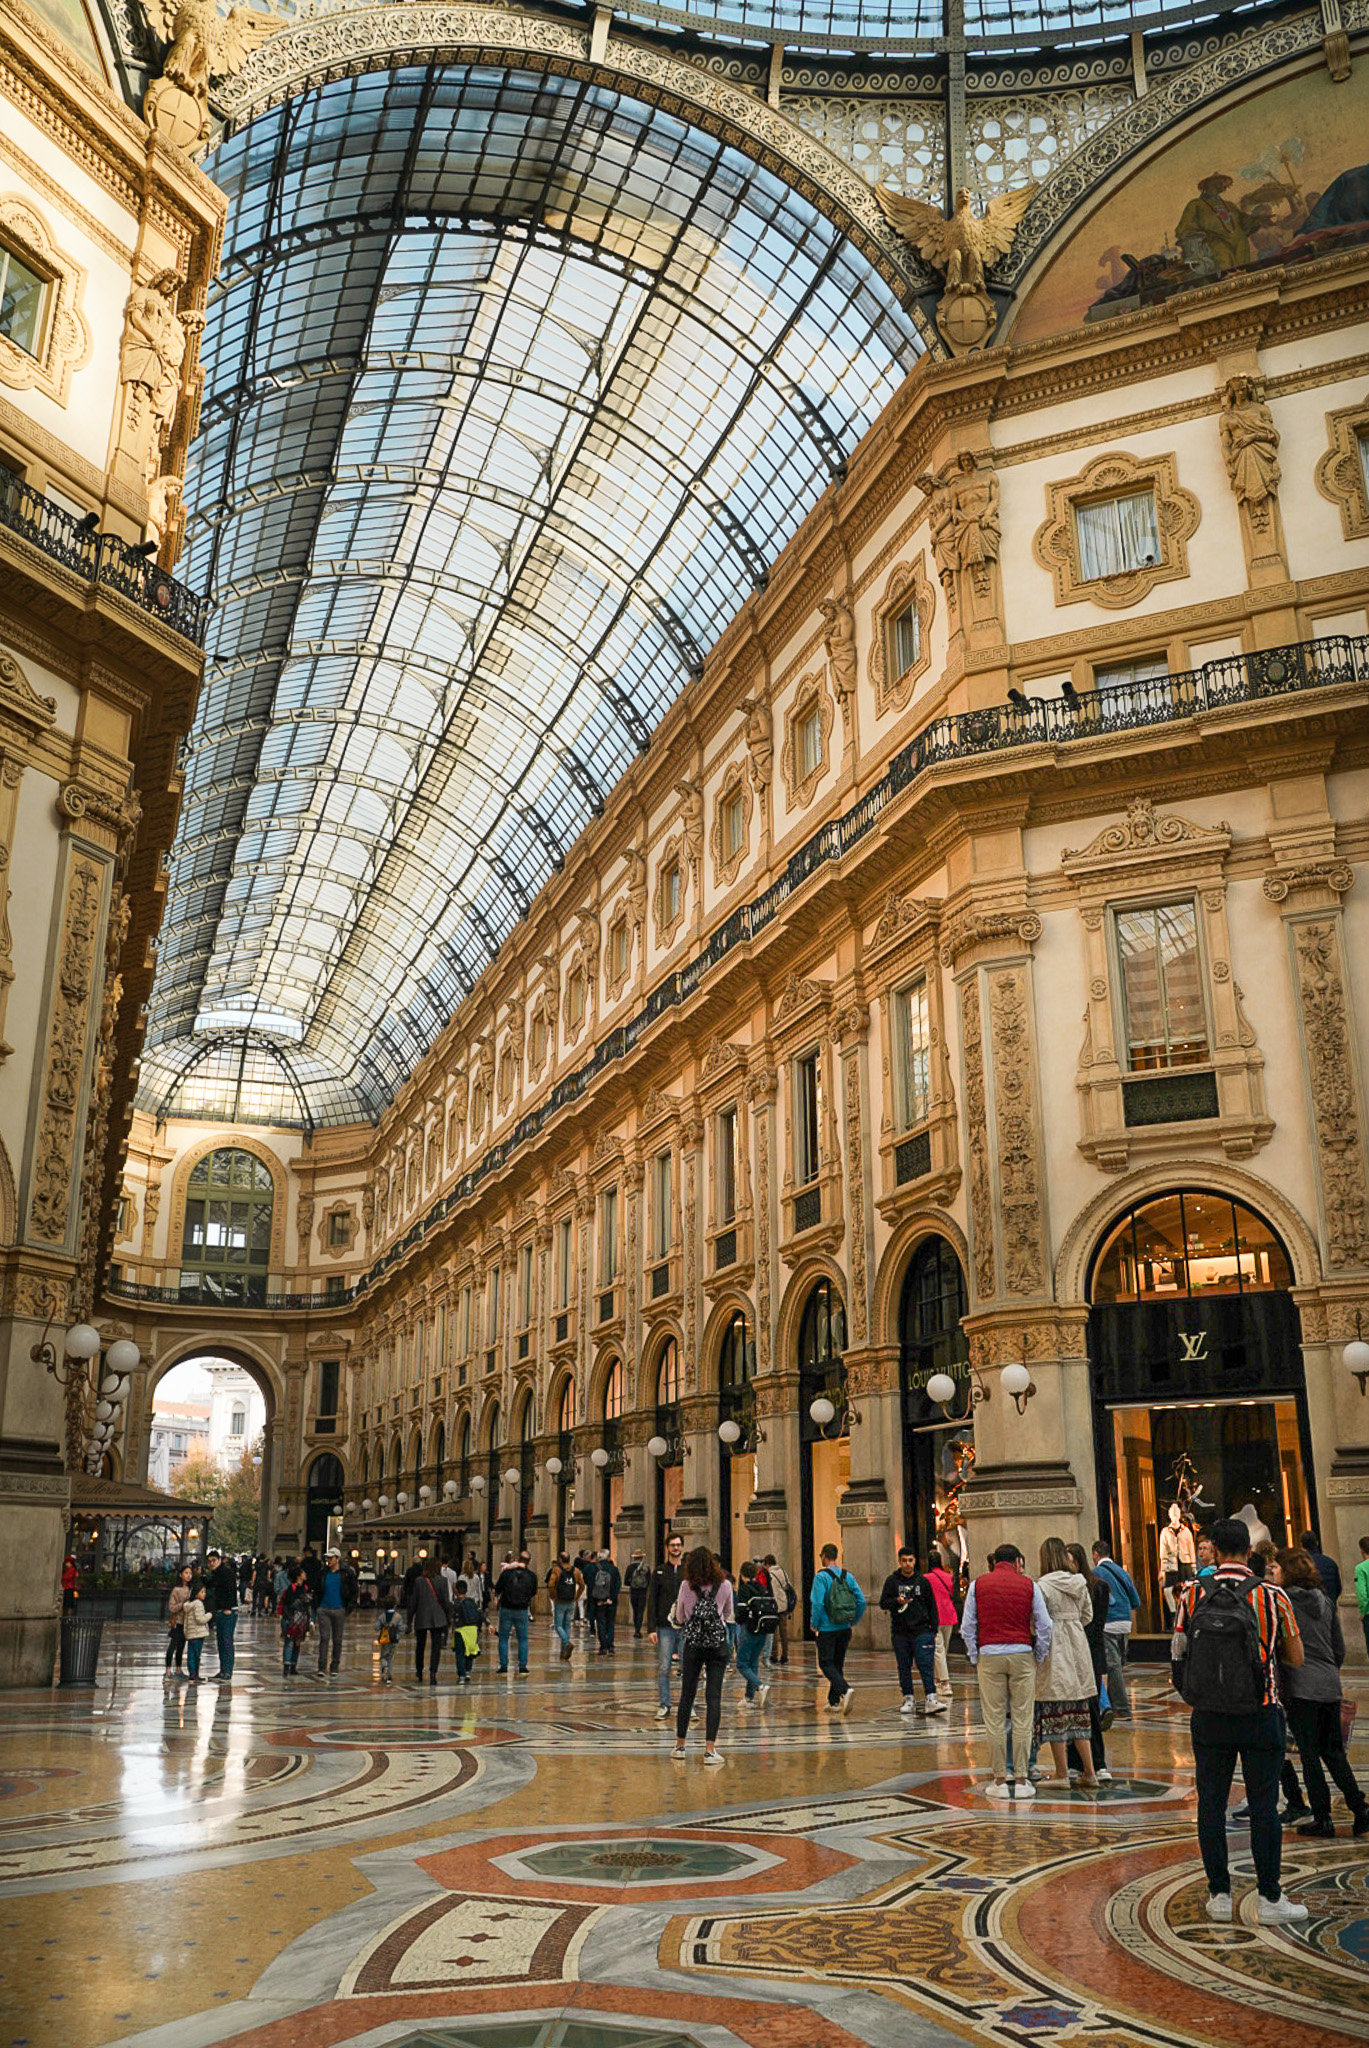 Galleria Vittorio Emanuele II Mall Milan Italy shopping center